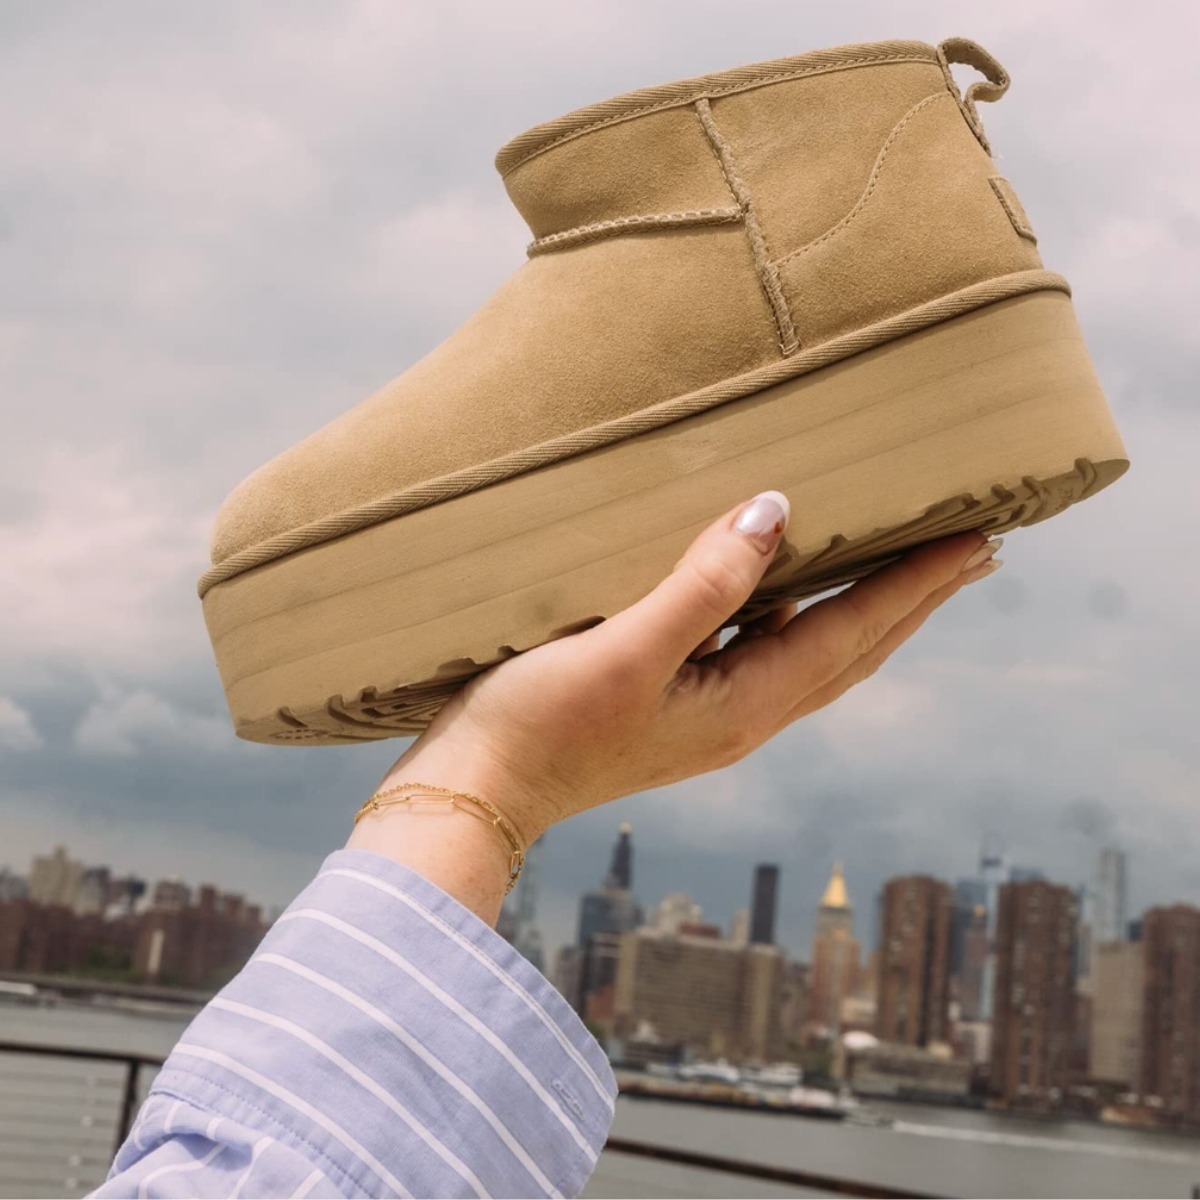 Rare Deal- UGG Boots on Sale for 53% Off, Platform, Ultra Mini, & More